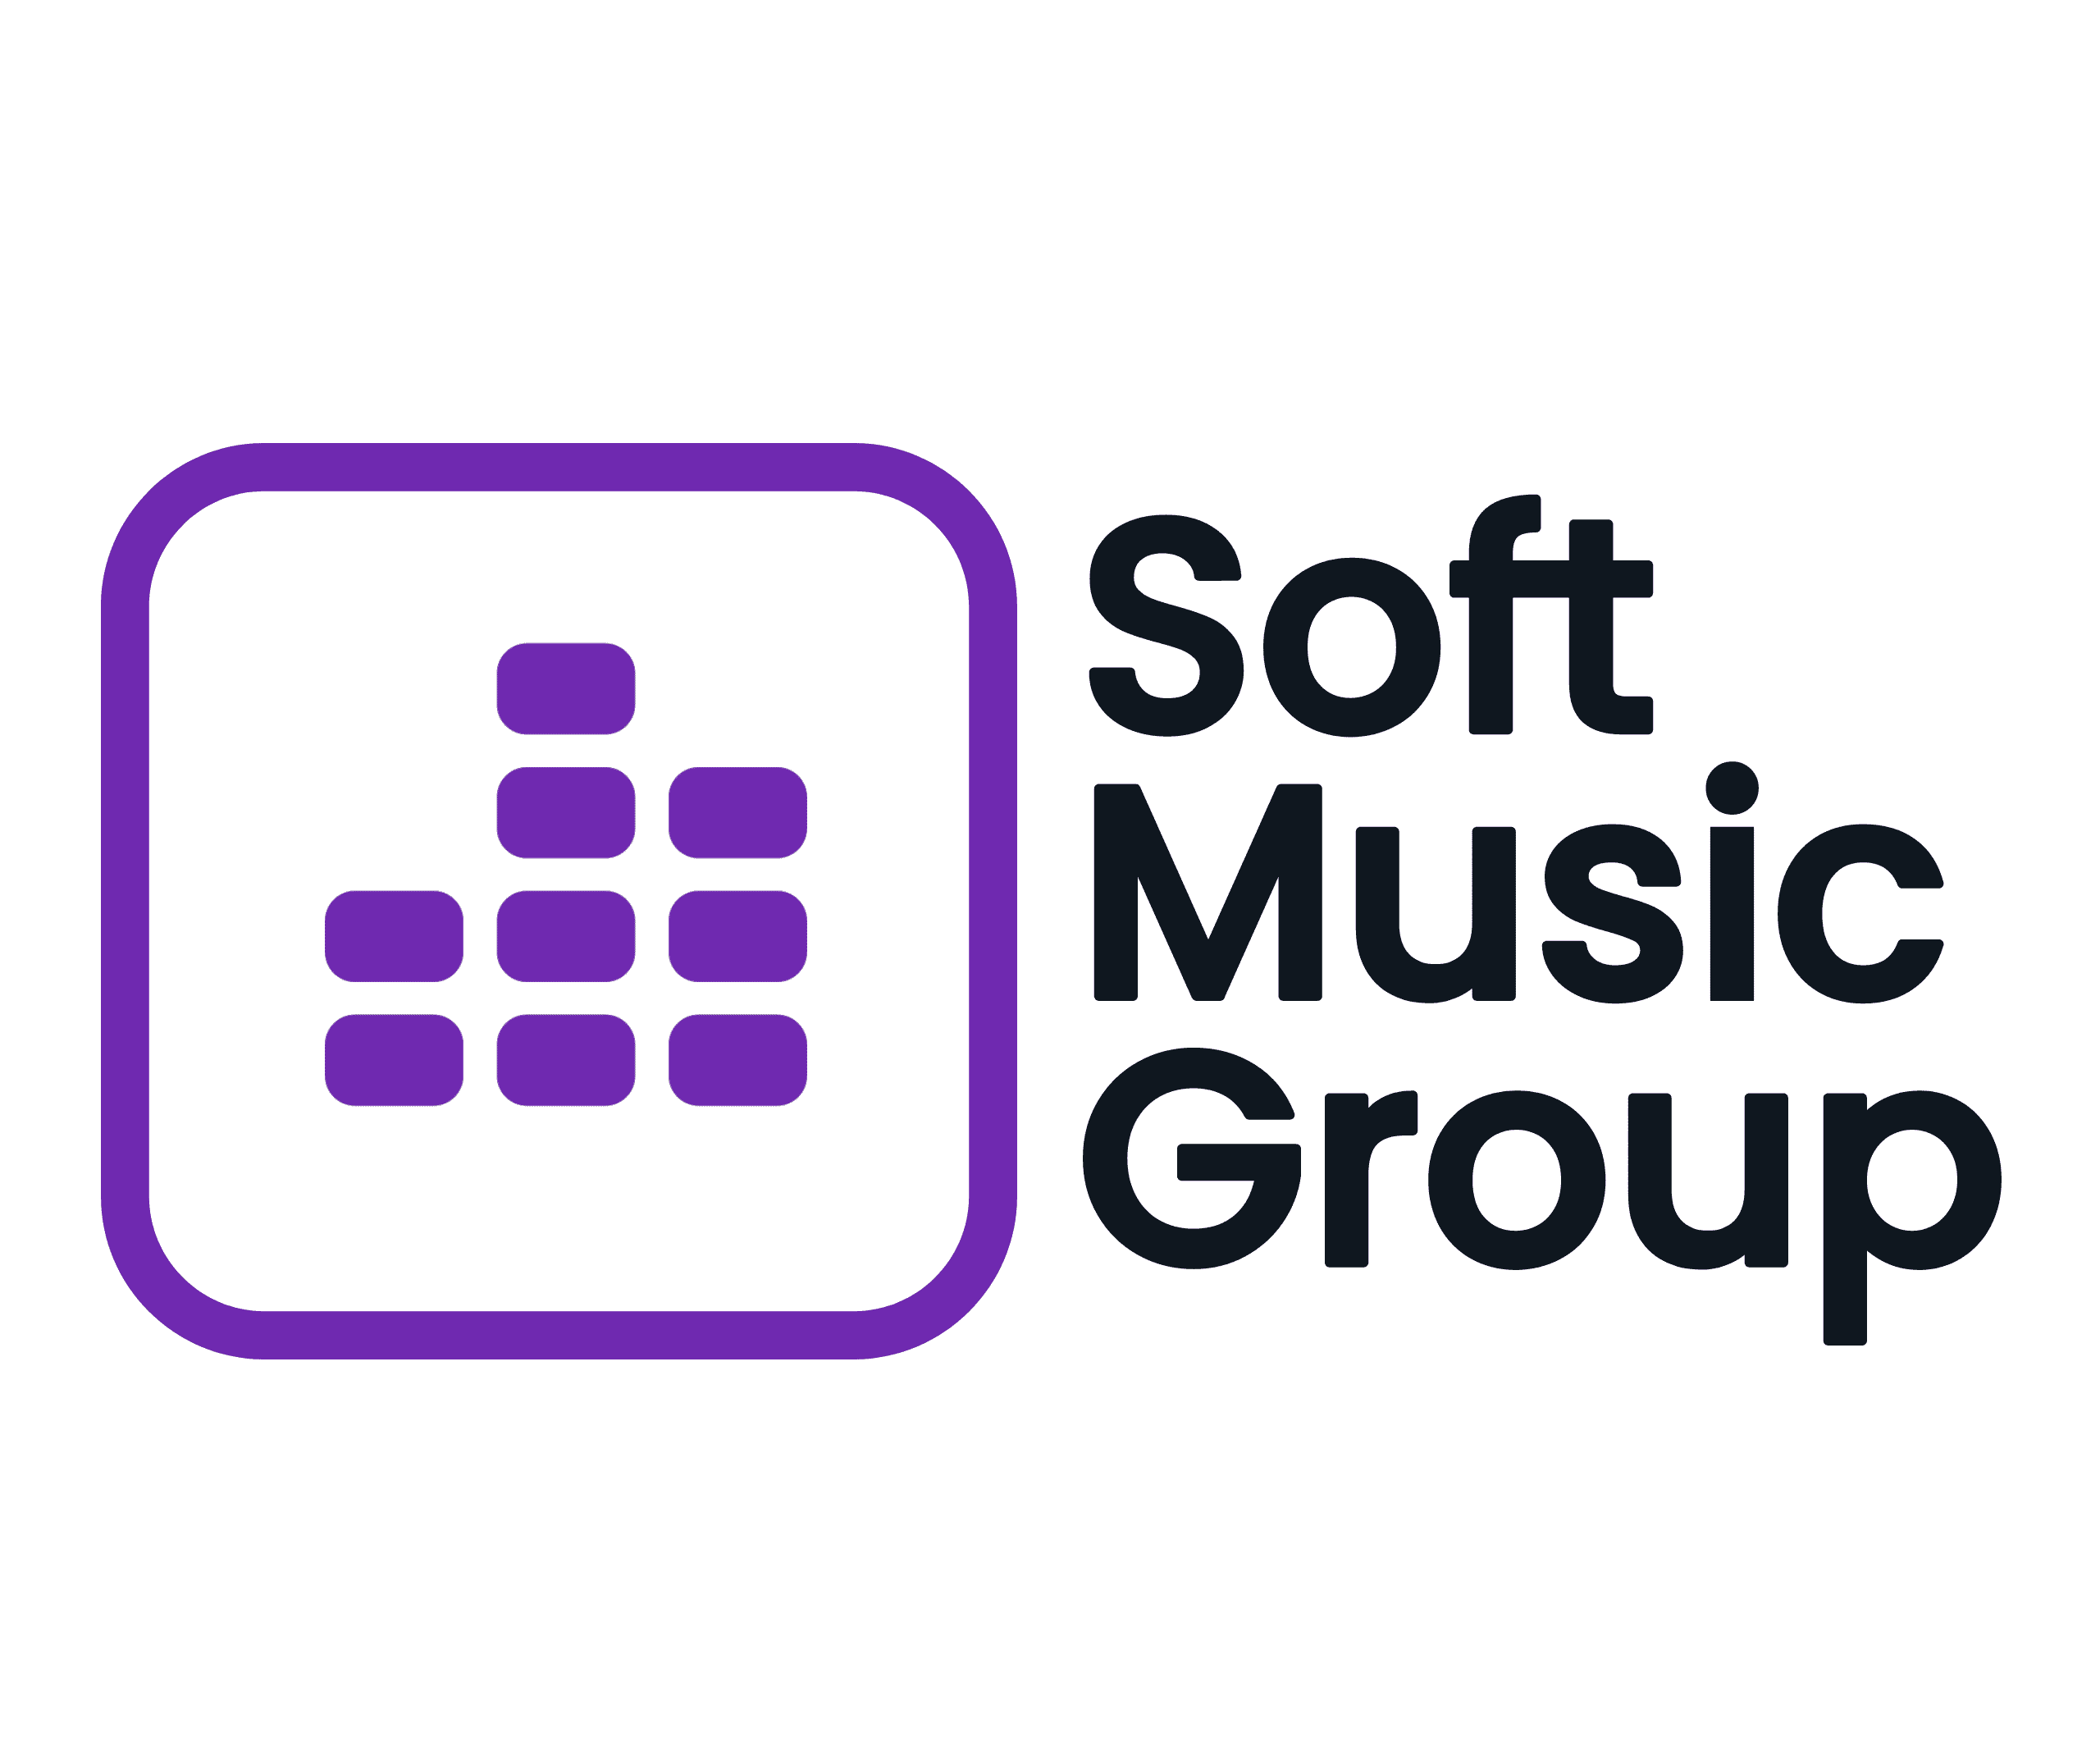 Soft Music group transparent logo